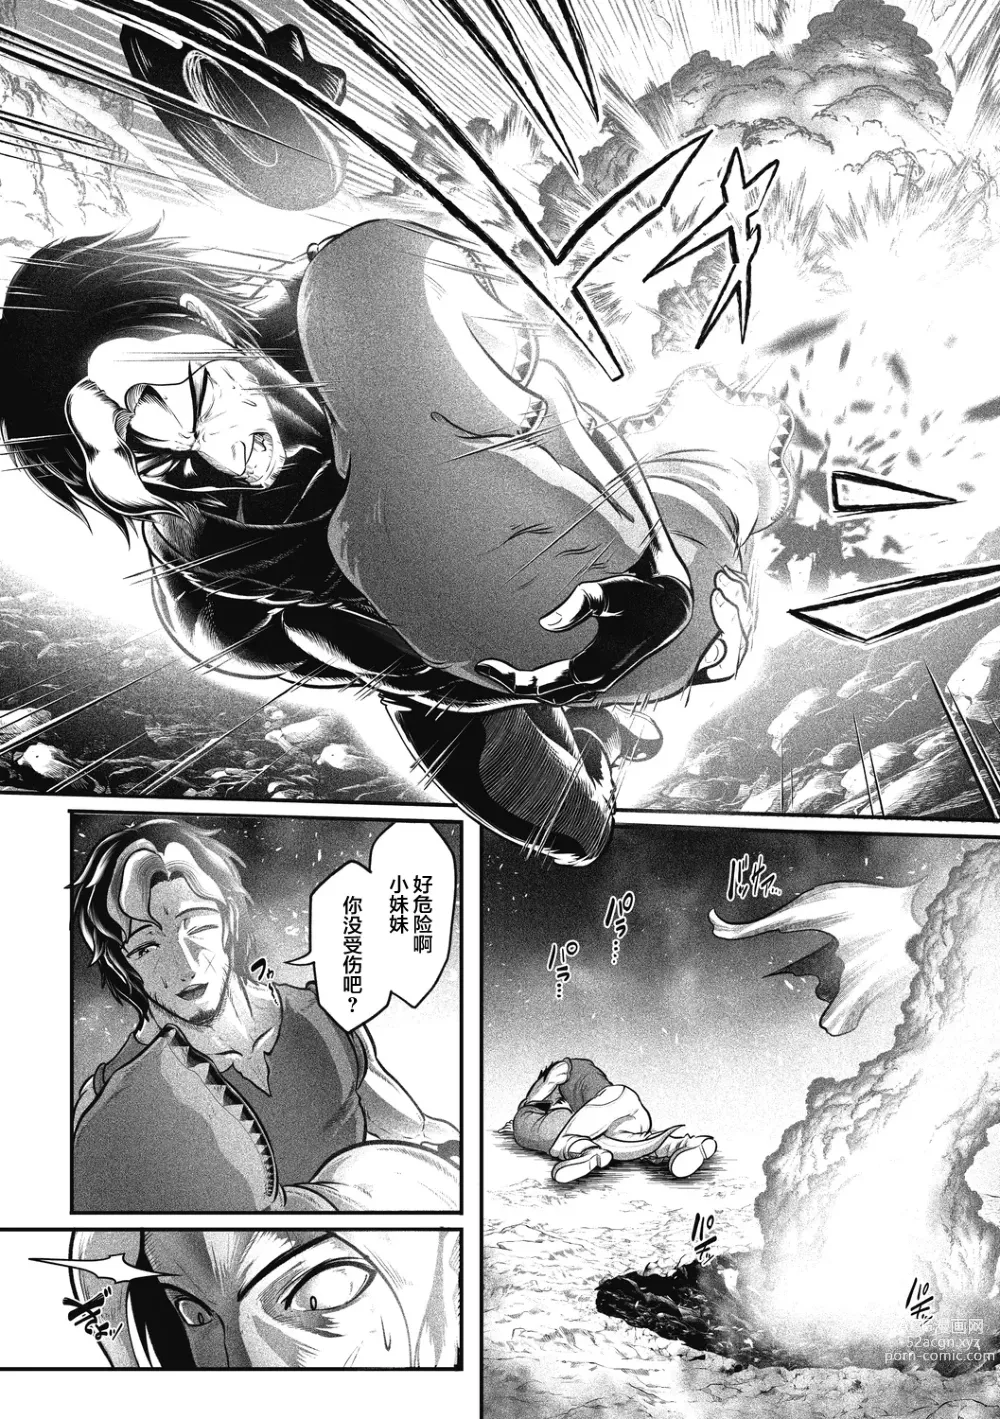 Page 3 of manga Dinosaur Journey